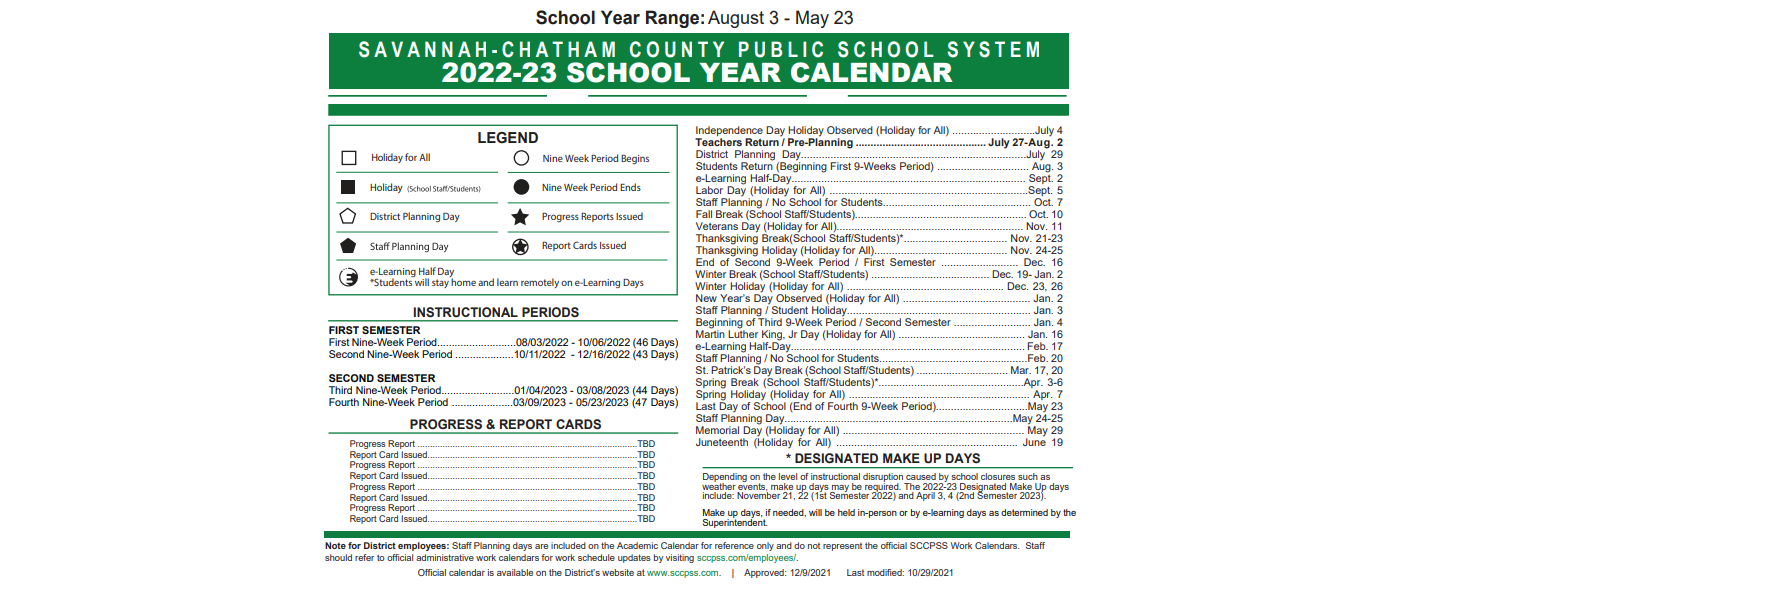 District School Academic Calendar Key for Hesse Elementary School